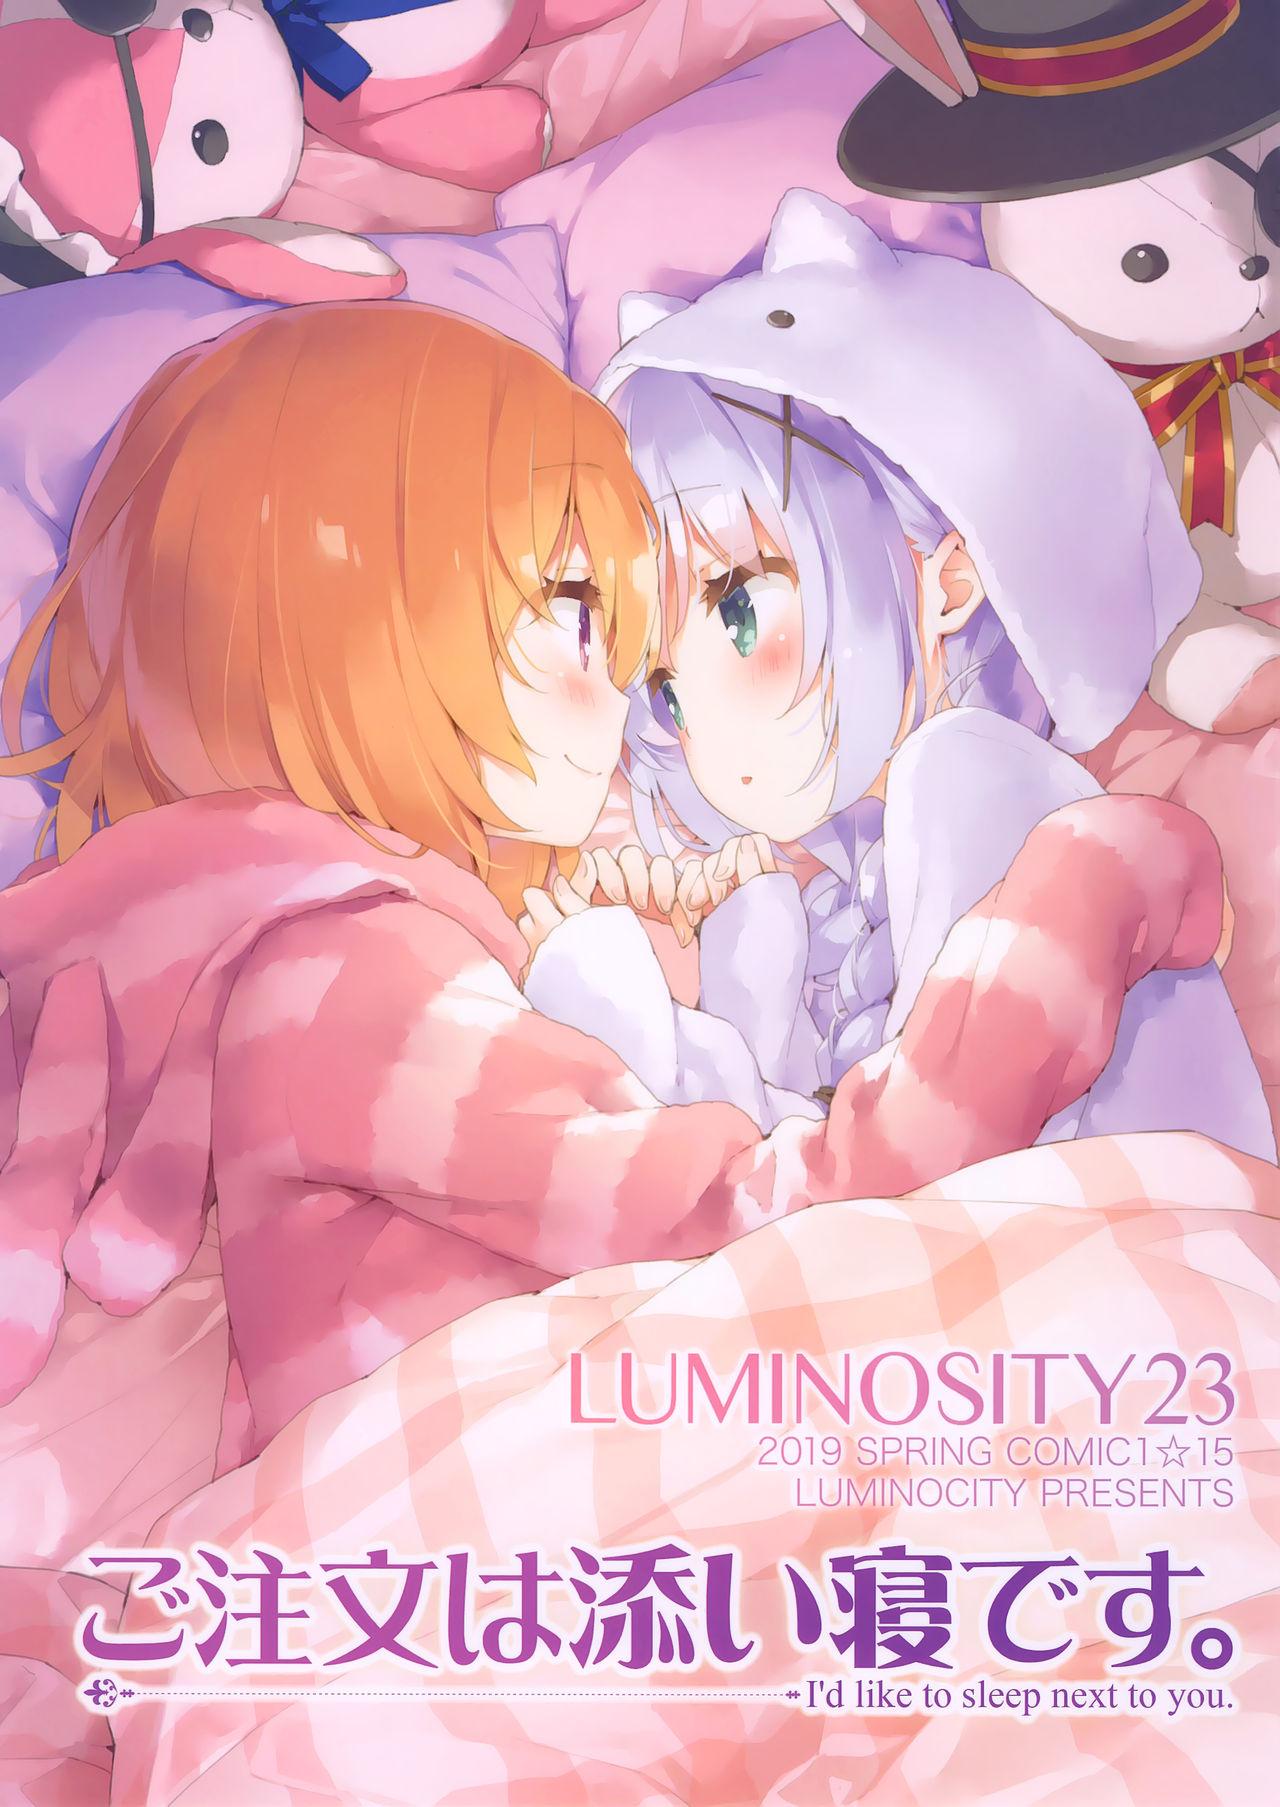 Luminocity 23 Gochuumon wa Soine desu. - I'd like to sleep next to you. 0